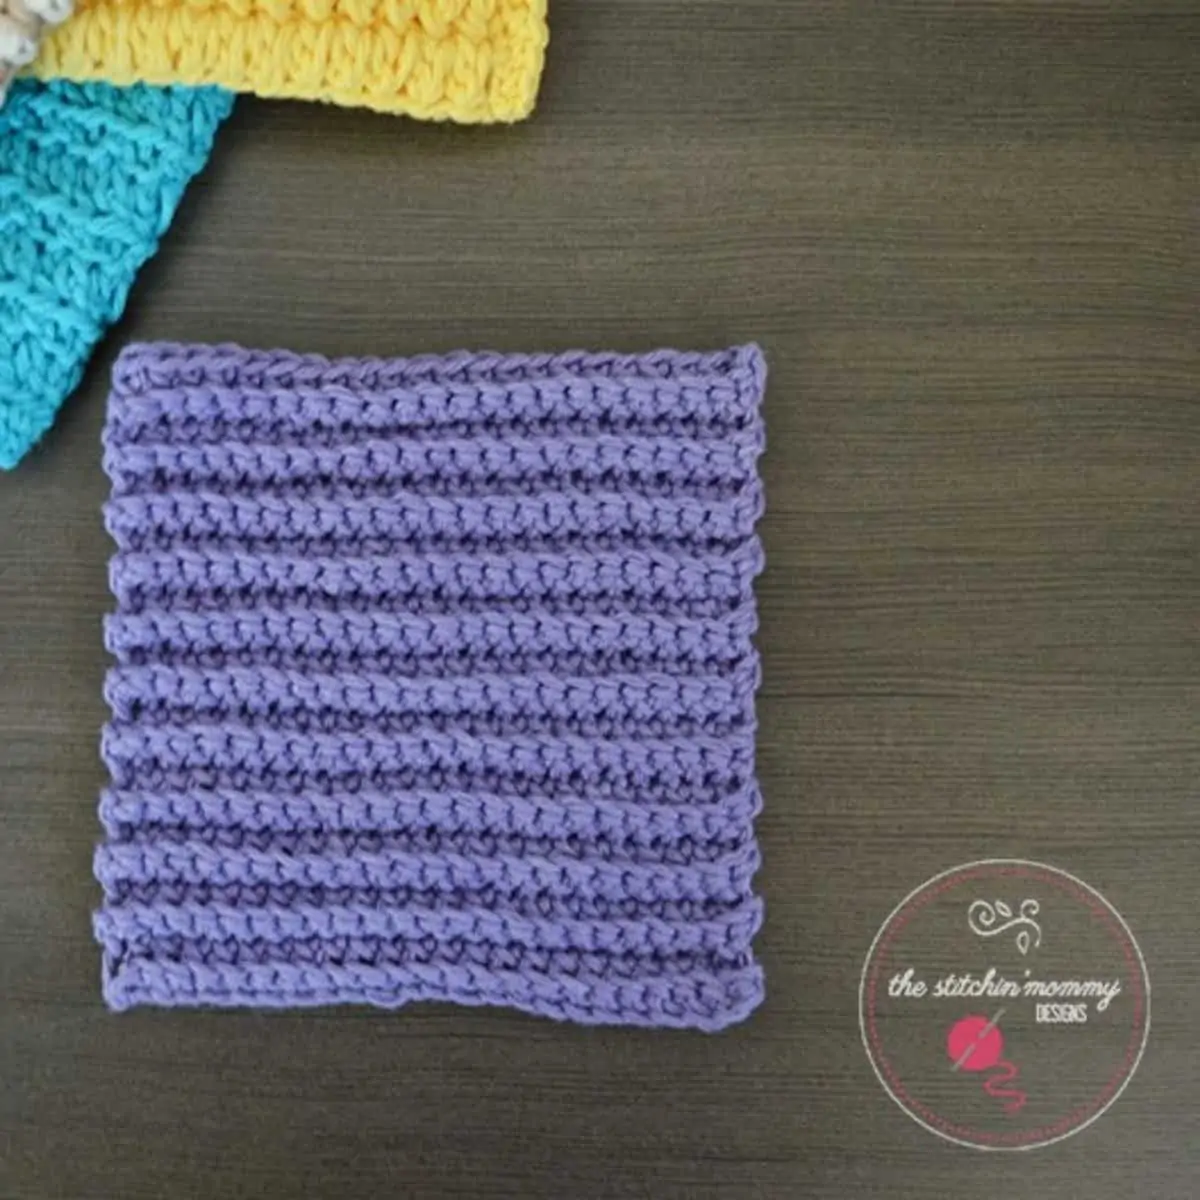 https://www.stitching-together.com/wp-content/uploads/2018/07/ribbed-single-crochet-dishcloth-pattern.webp